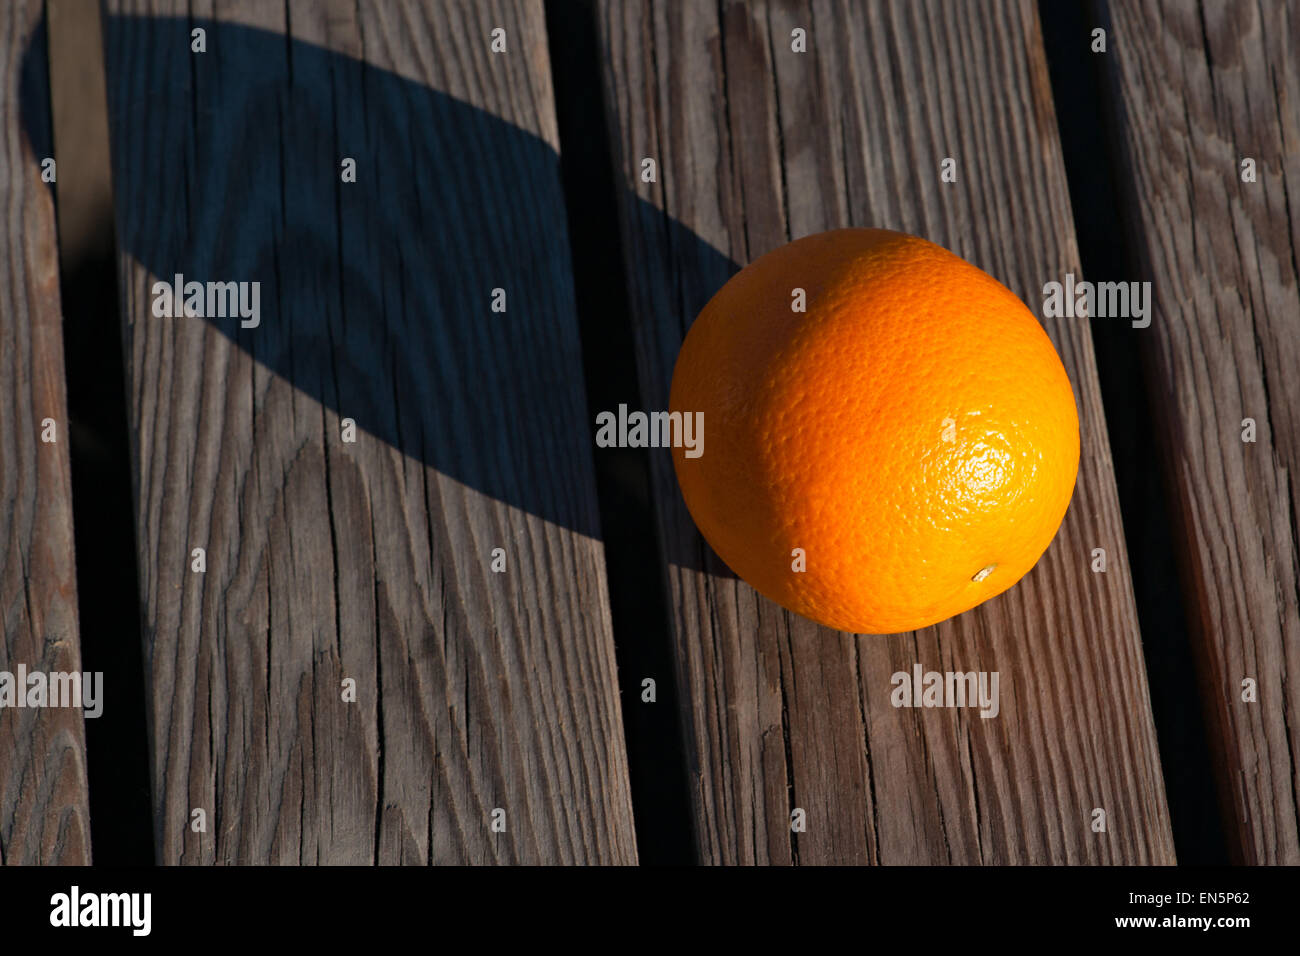 orange-fruit-on-a-wooden-bench-in-incline-sunlight-the-fruit-casts-EN5P62.jpg